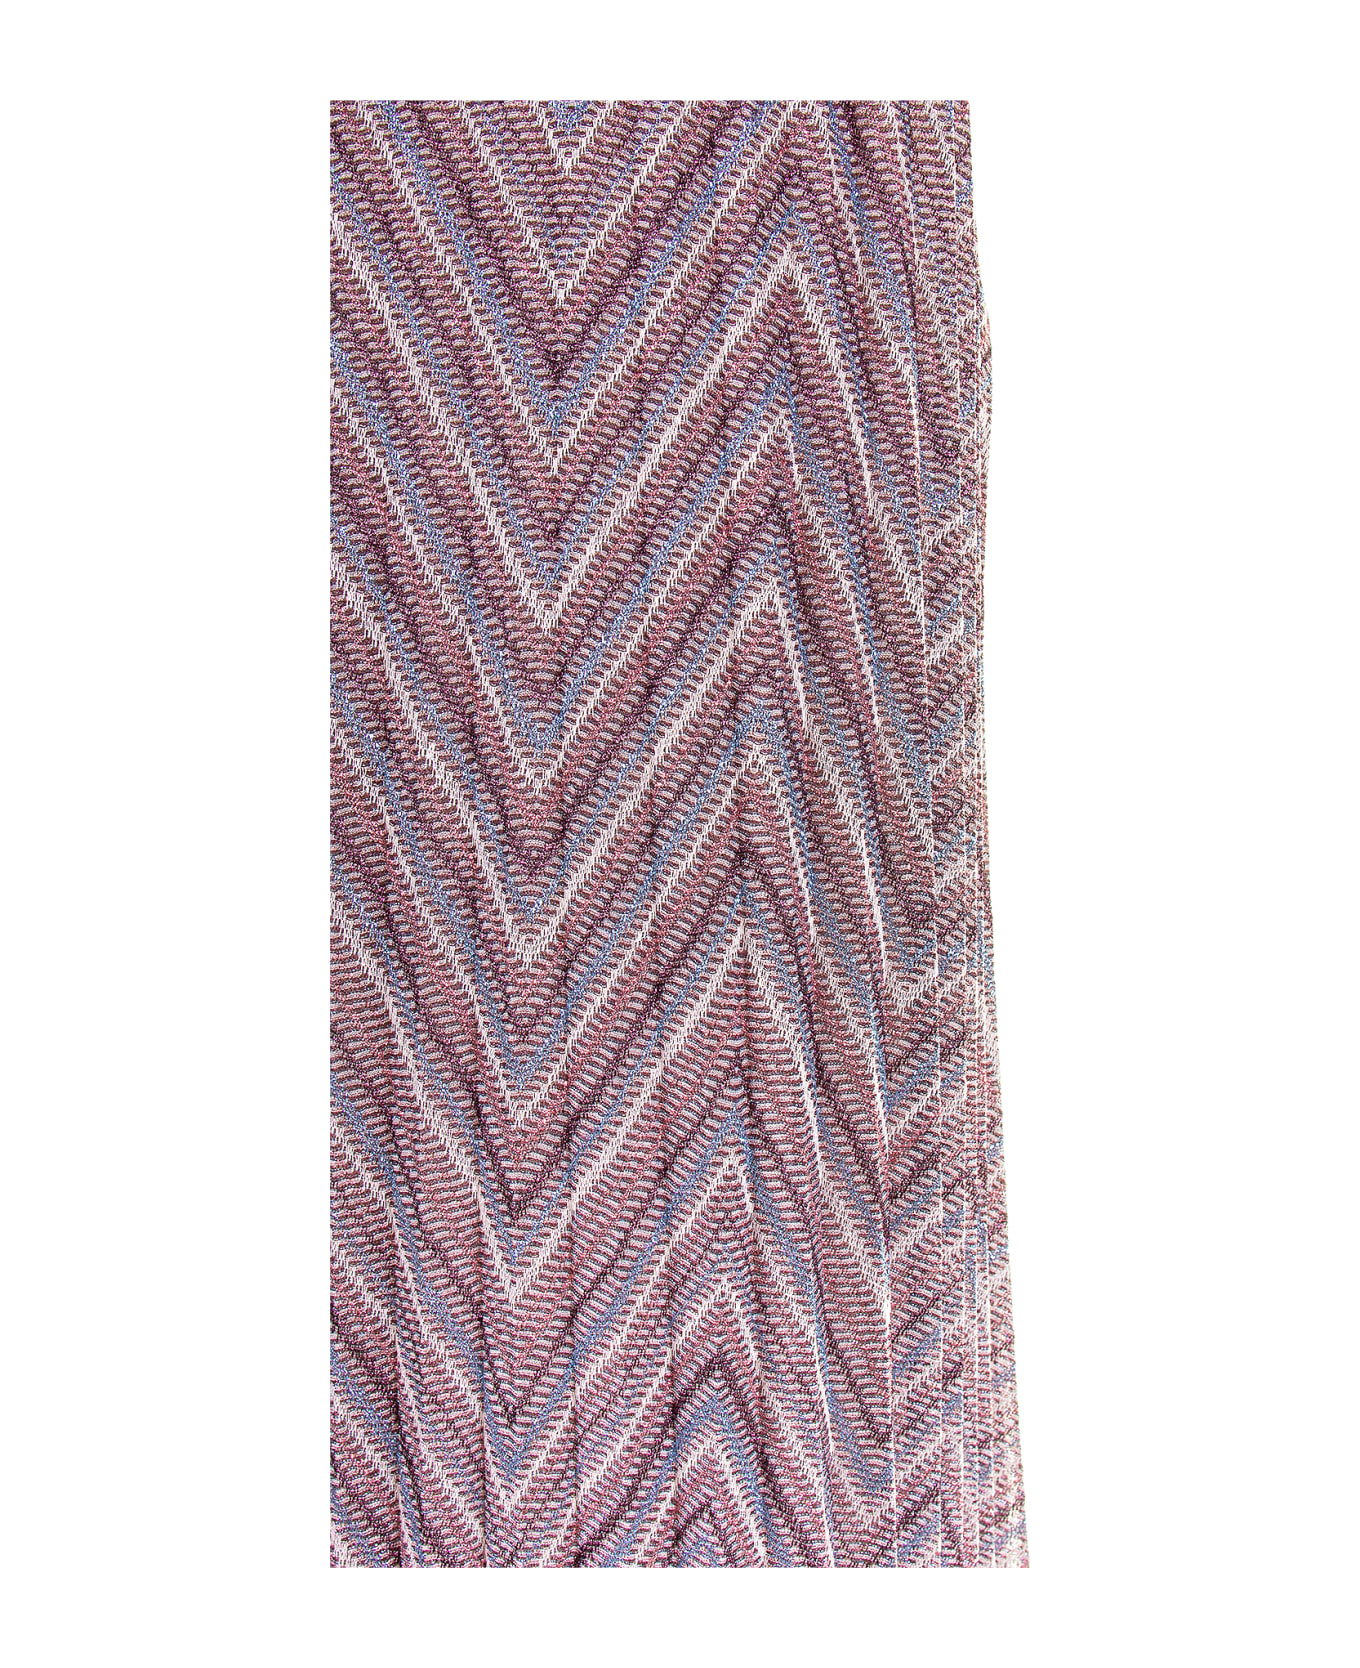 Kaos Multicolored Pink Long Dress - BORDEAUX